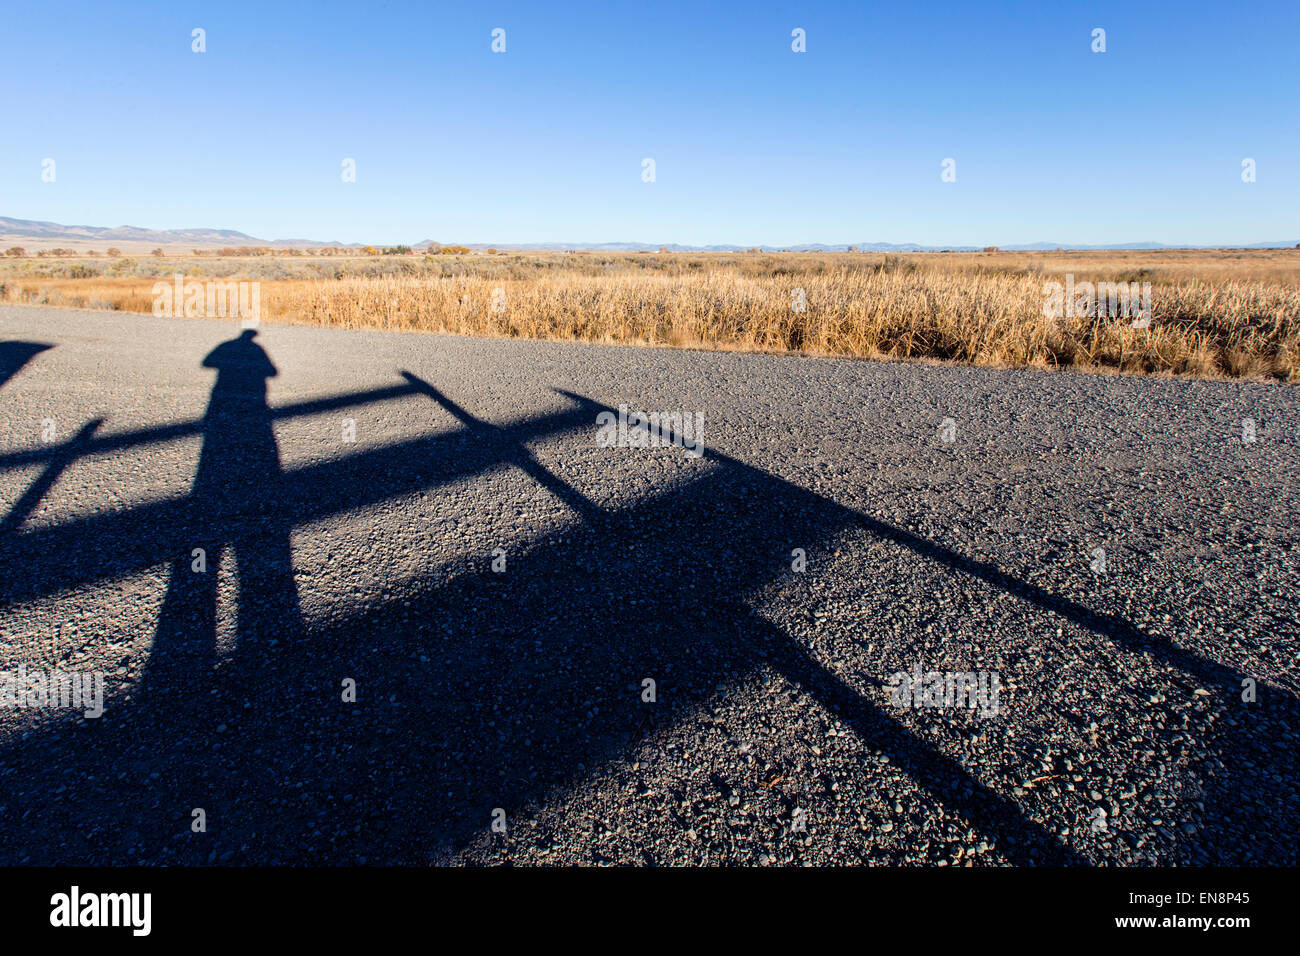 Self portrait of photographer's shadow on gravel road near Monte Vista, Colorado, USA Stock Photo